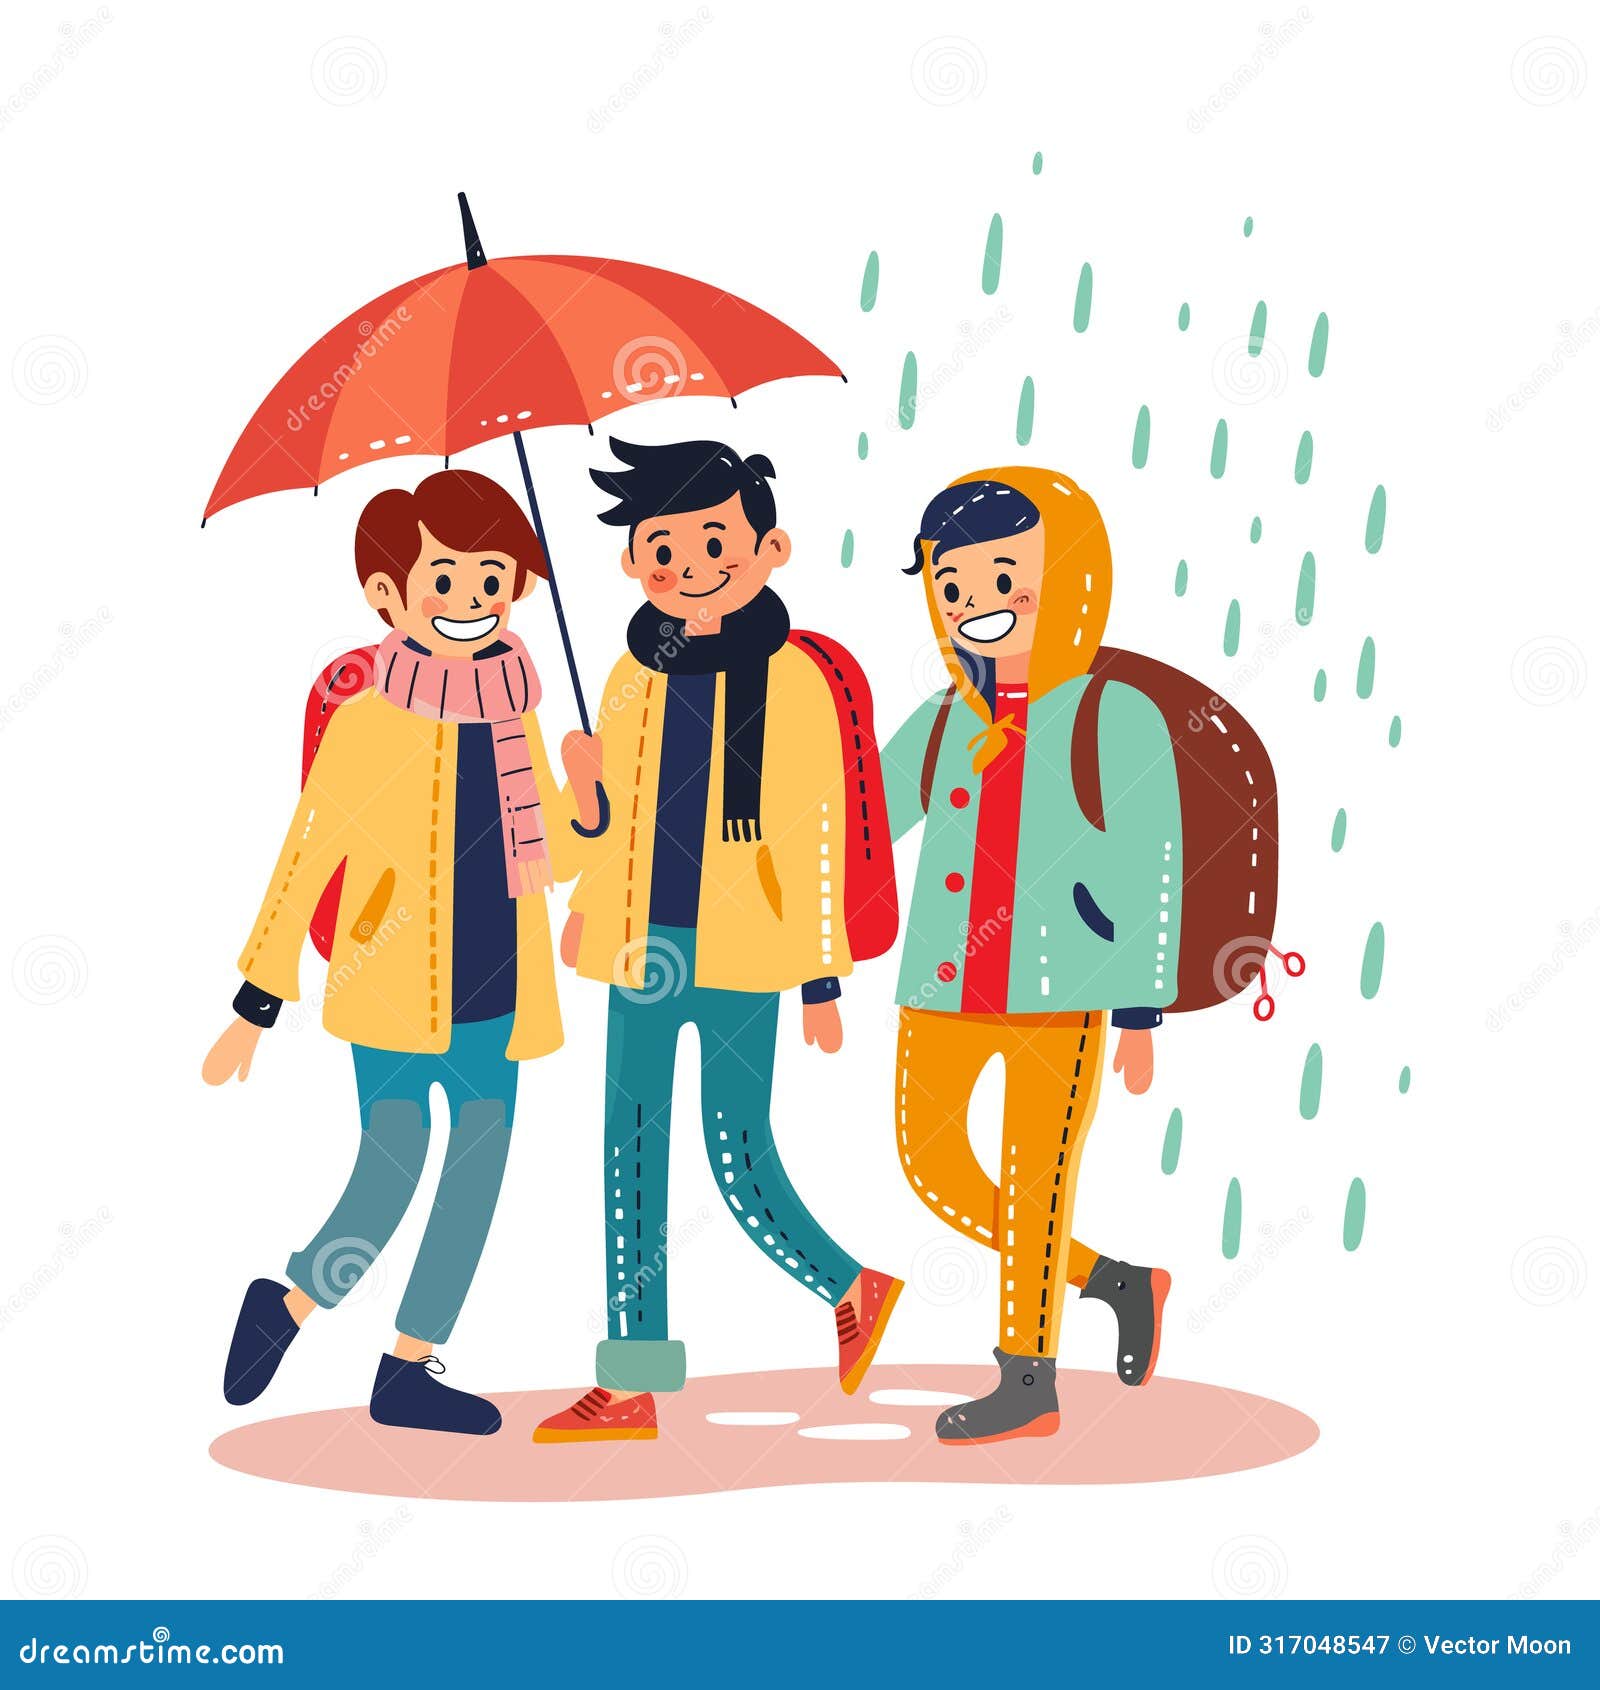 three friends walking under umbrella during rainfall, cheerful group characters raincoats.